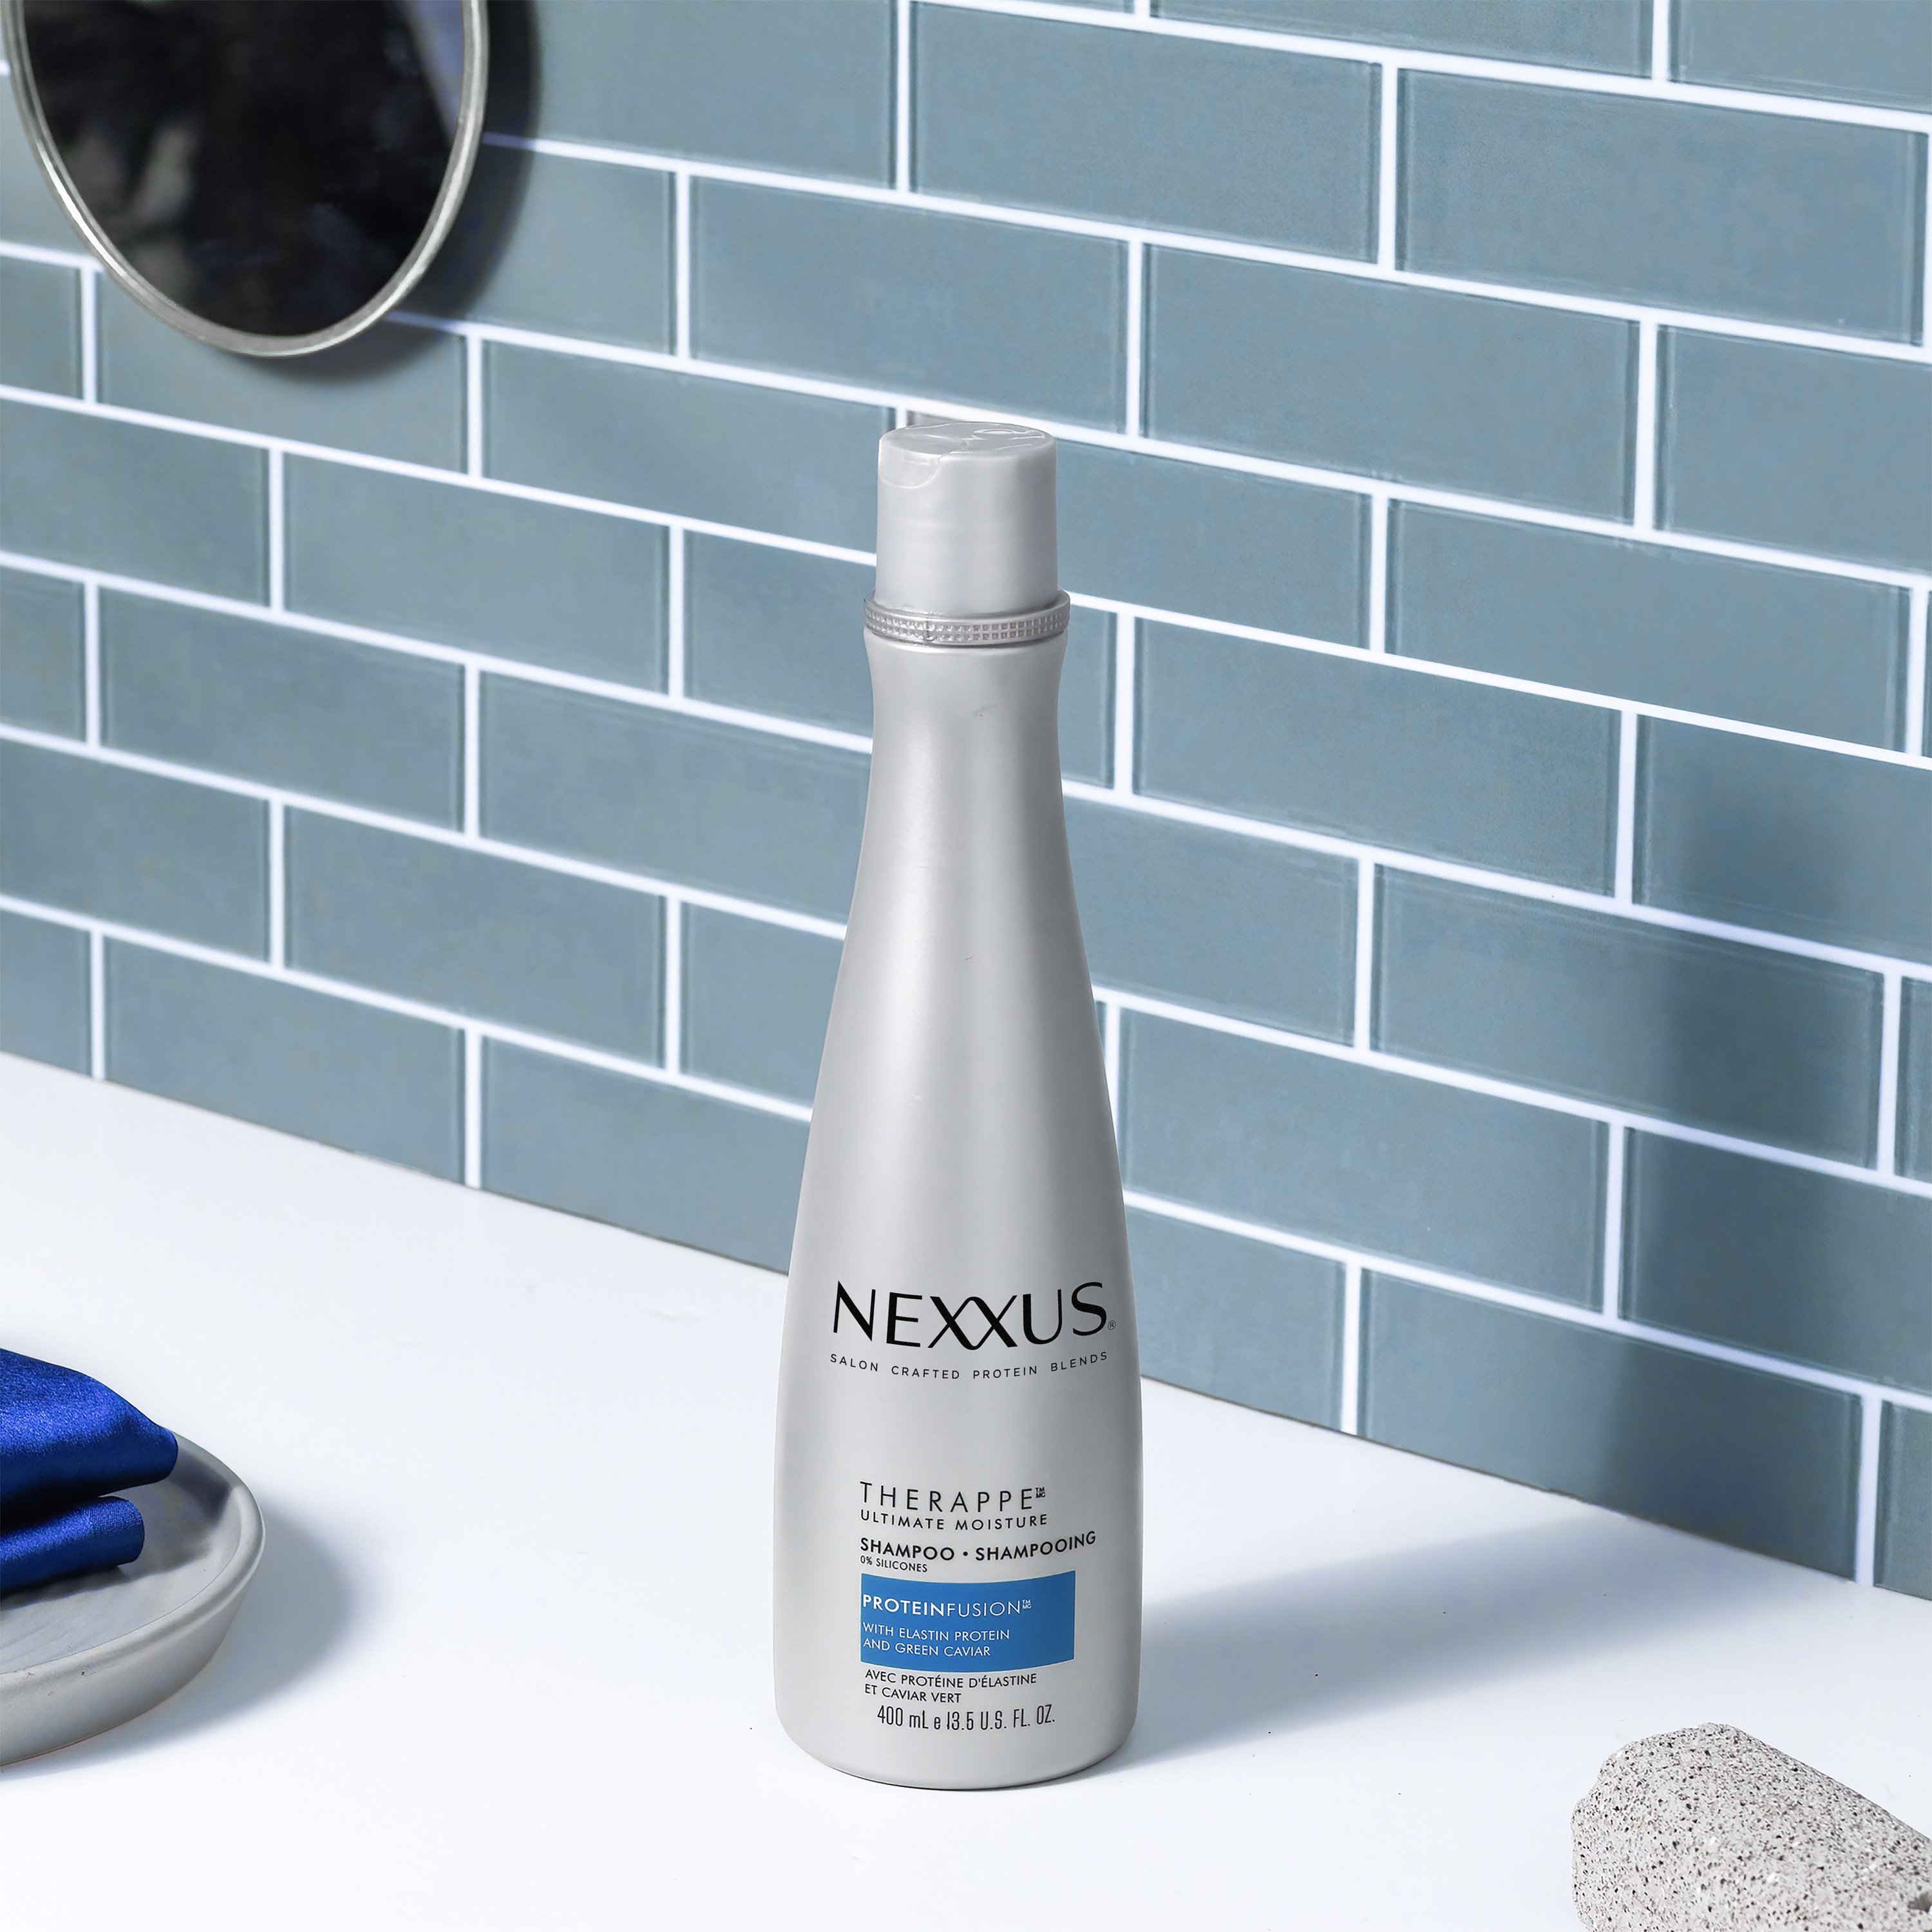 Nexxus Shampoo & Conditioner Color Assure Combo - Shop Shampoo &  Conditioner at H-E-B